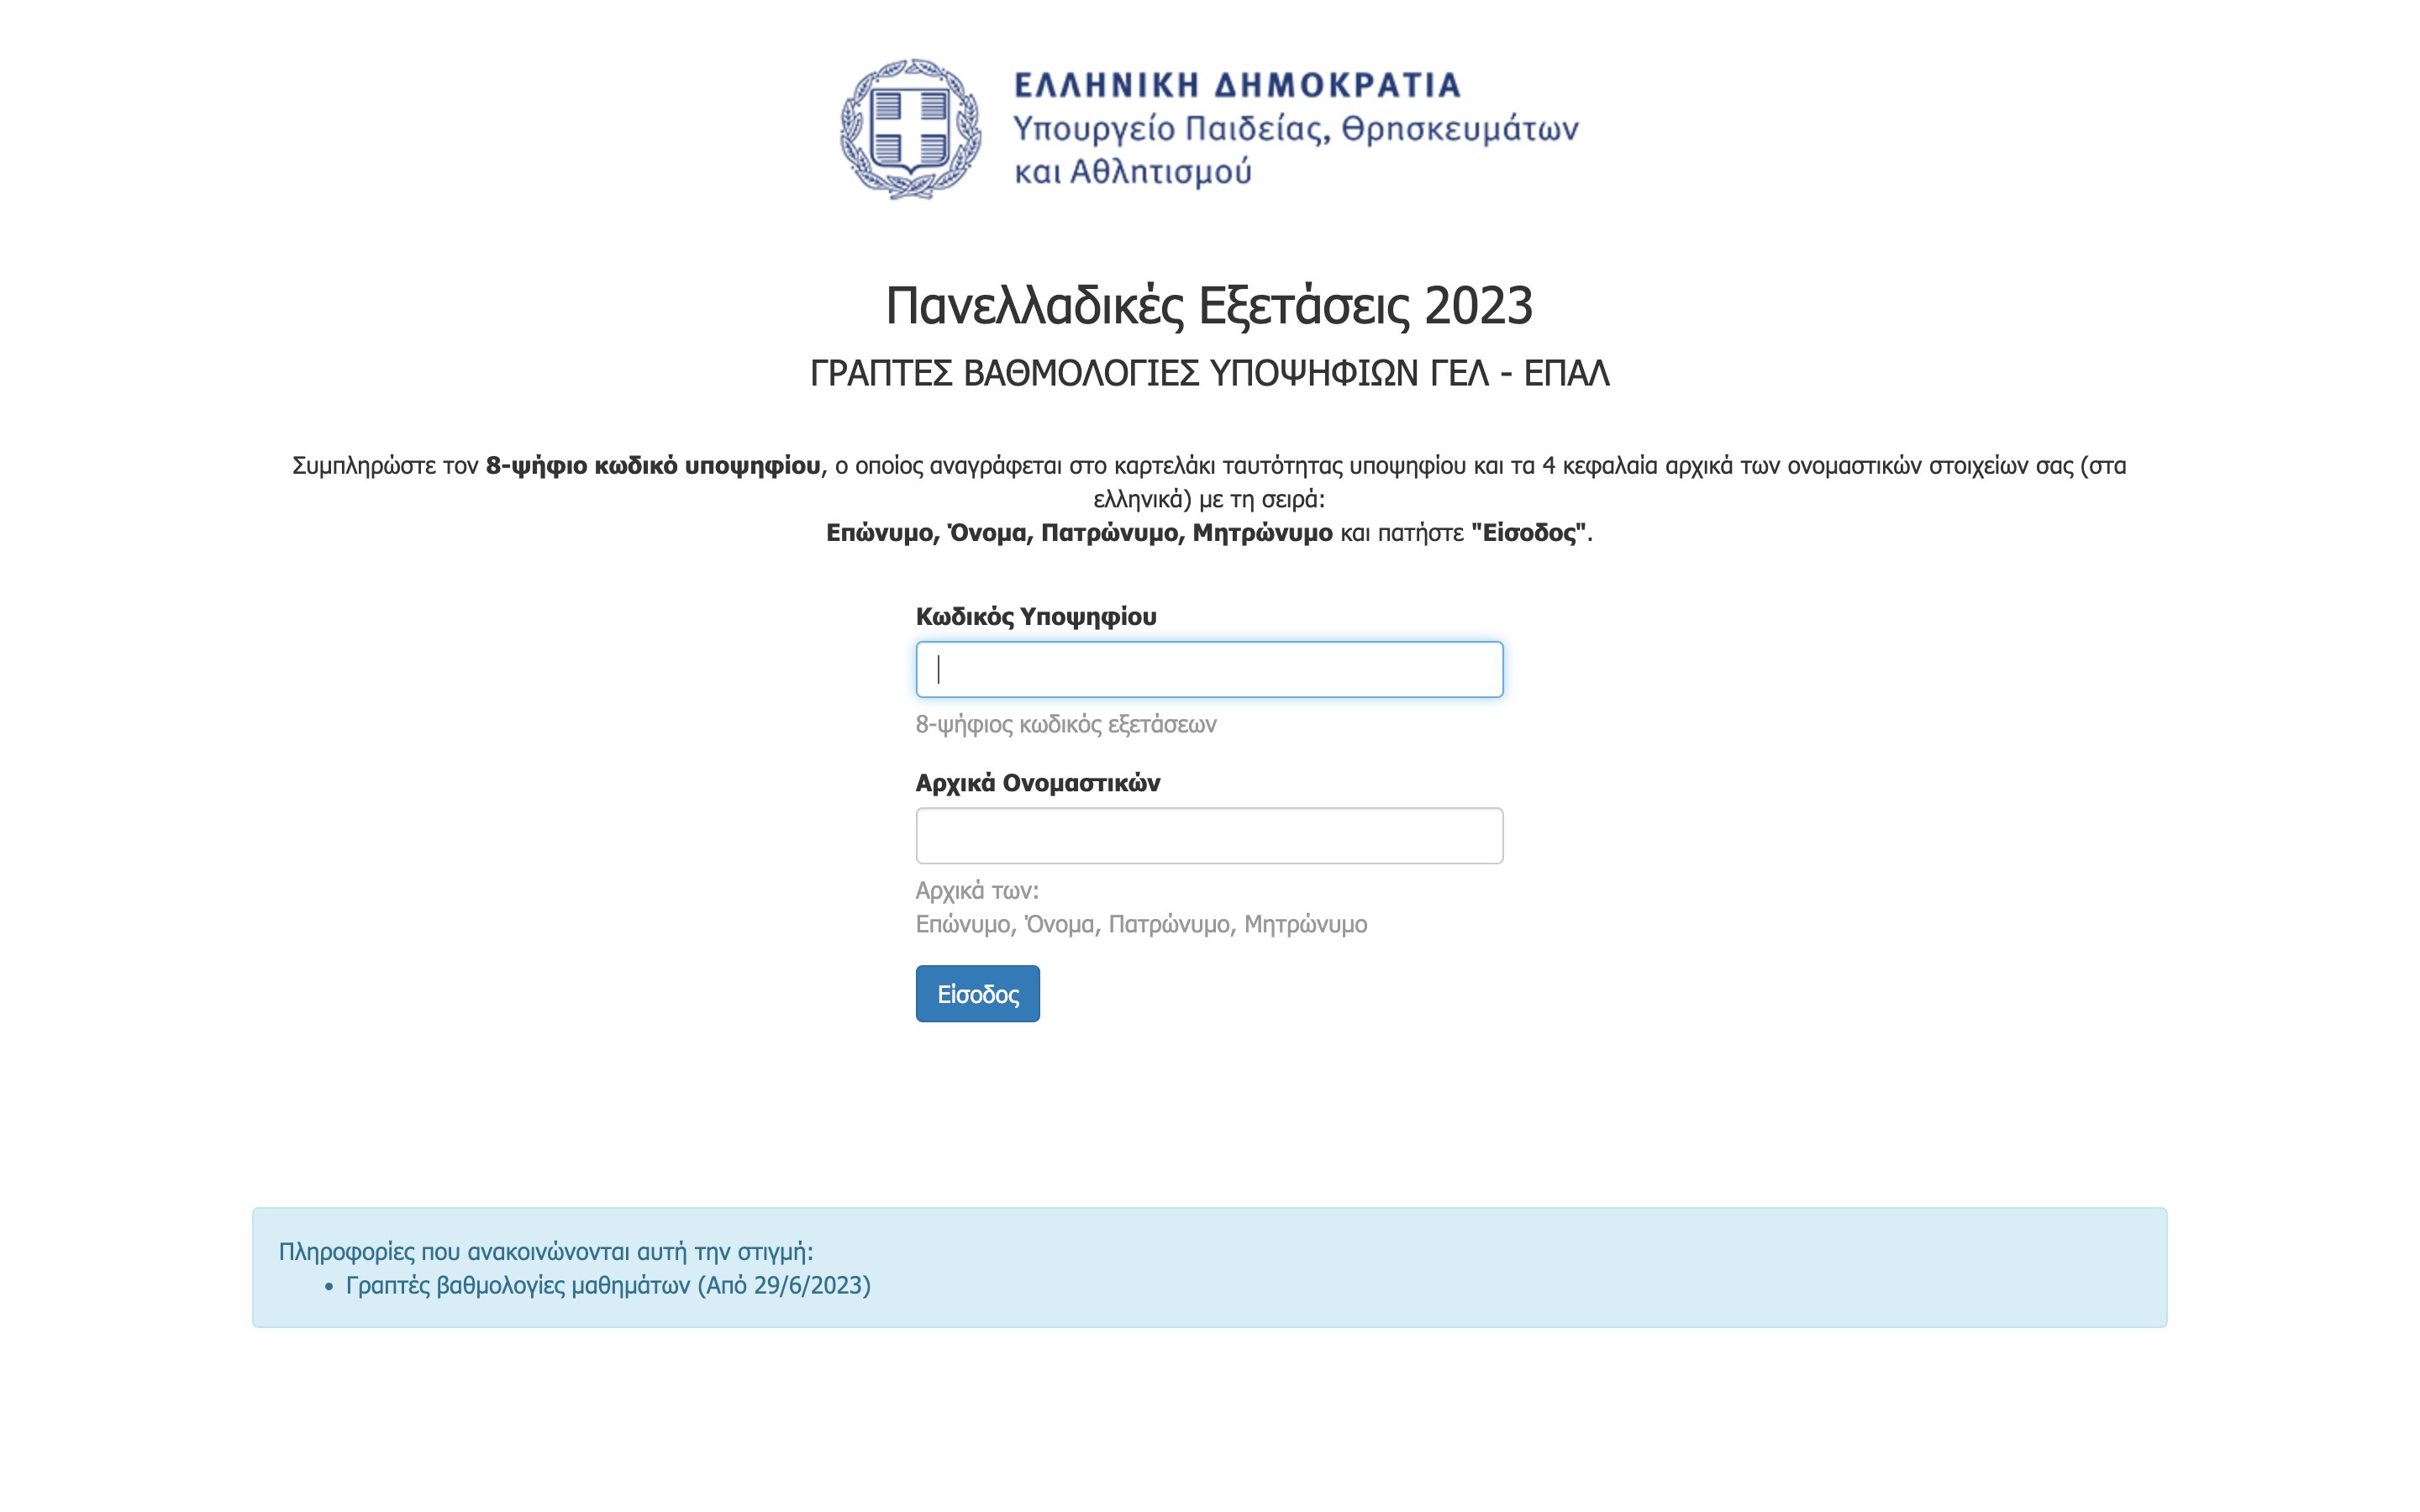 https://results.it.minedu.gov.gr/?ref=foititikanea.gr